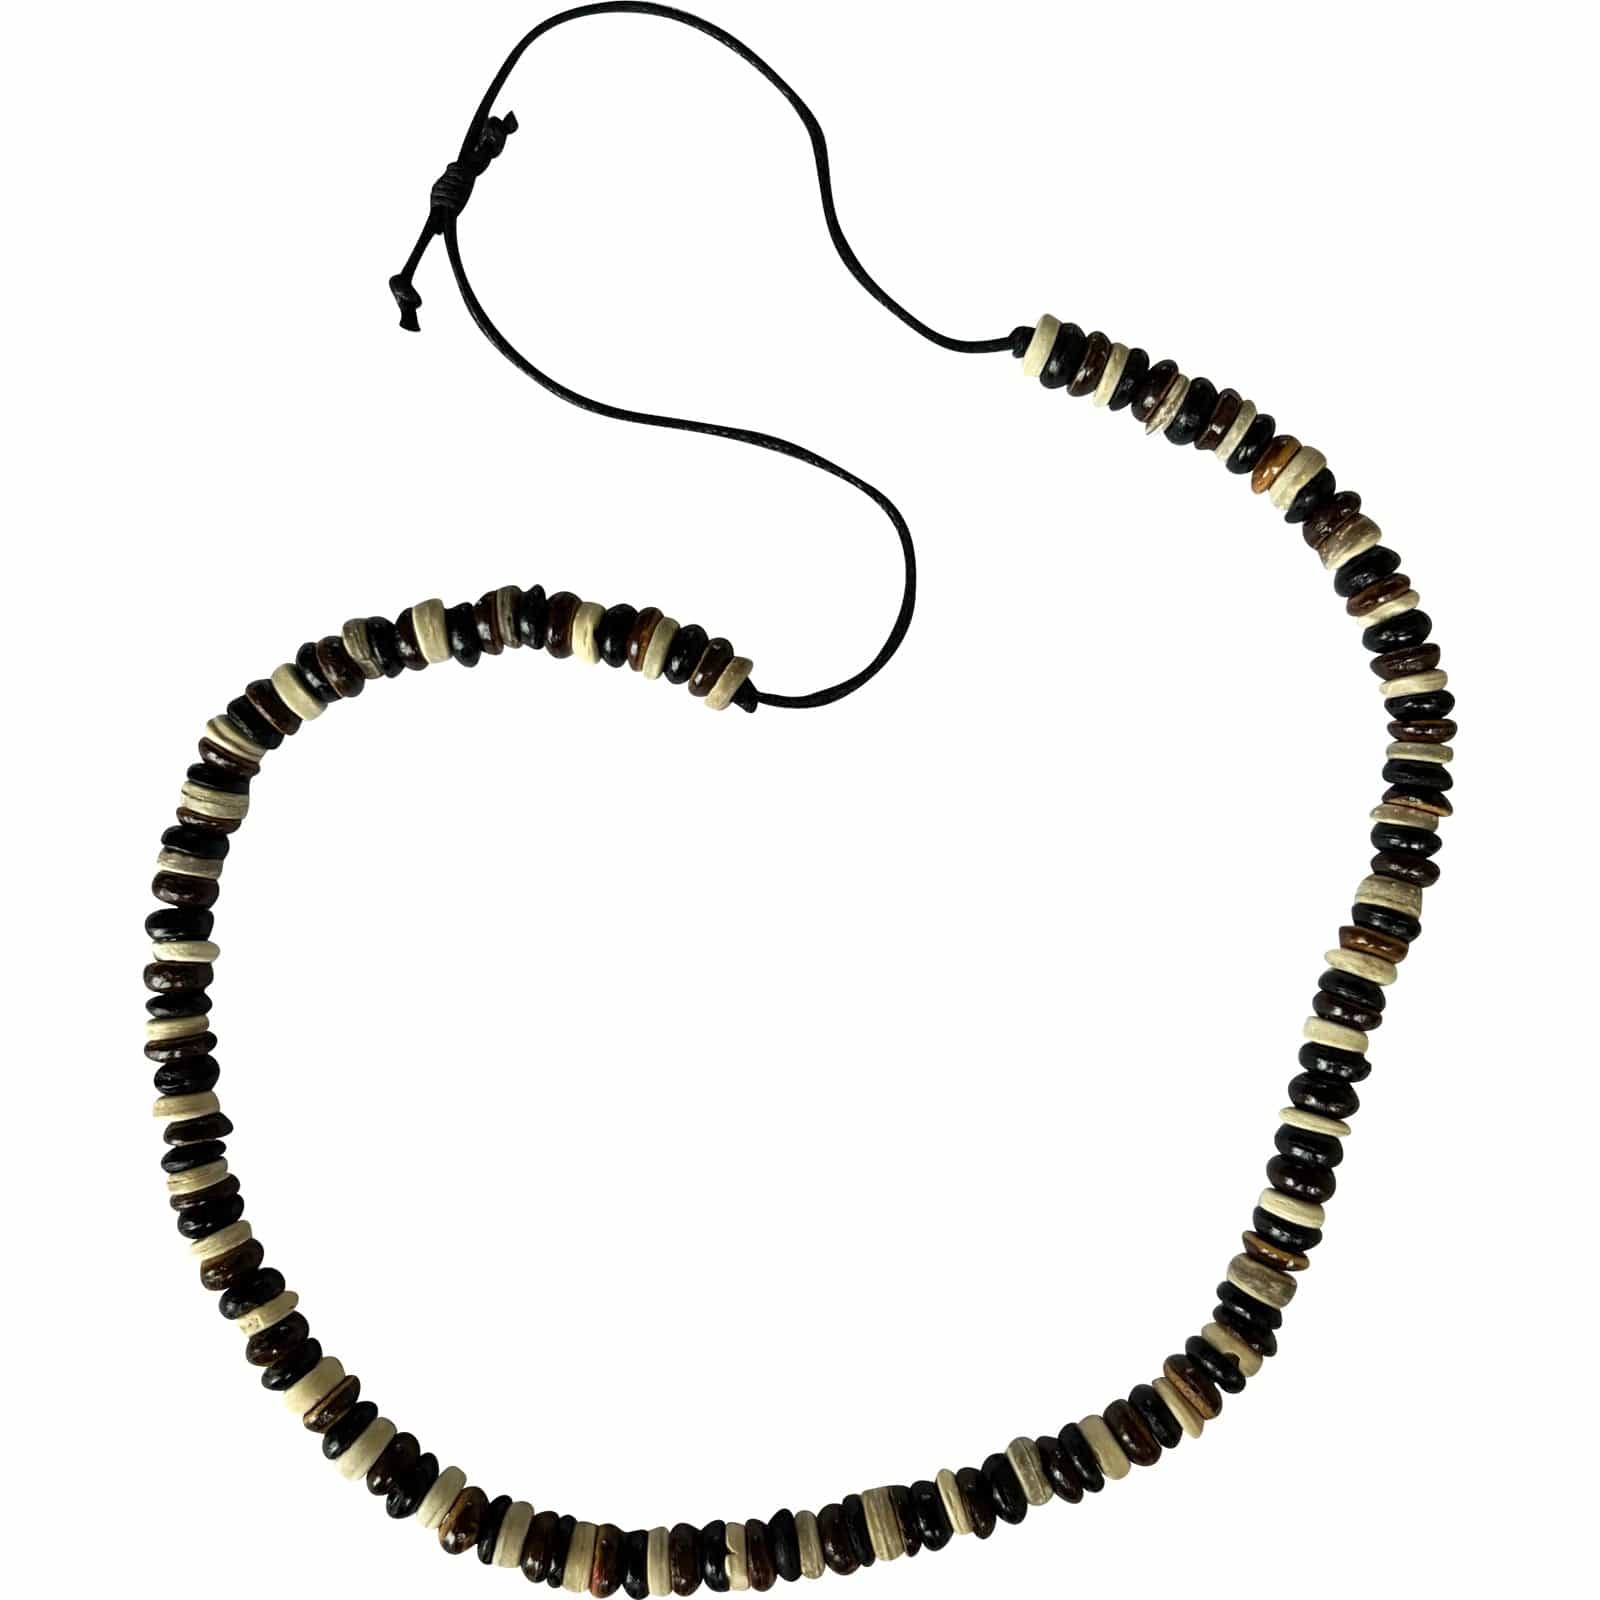 Adjustable Size Black Brown Coconut Wood Bead Necklace Chain Handmade Jewellery